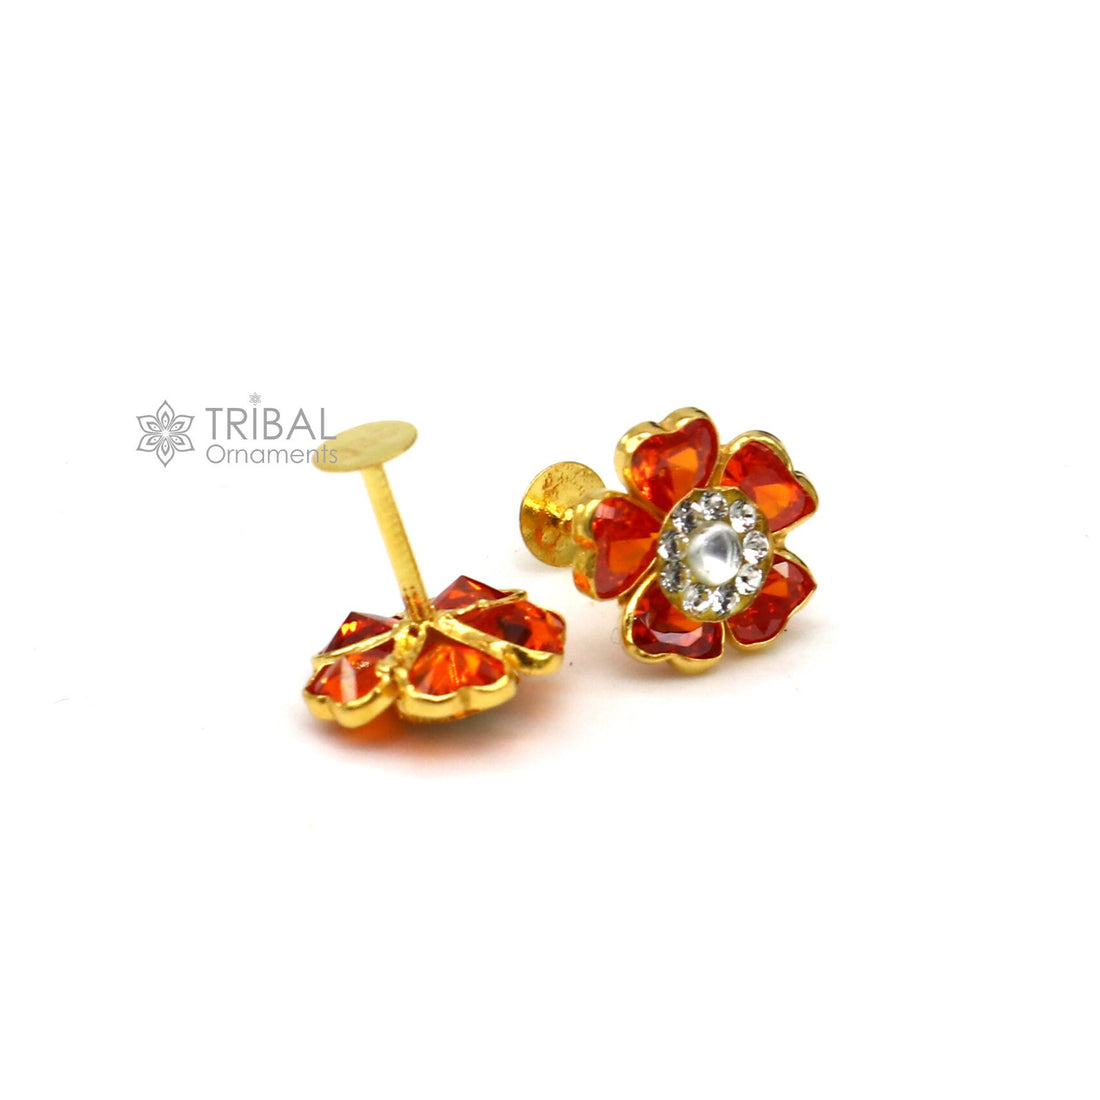 14kt yellow gold handmade fabulous orange Stone excellent vintage flower design stud earrings pair unisex jewelry er174 - TRIBAL ORNAMENTS